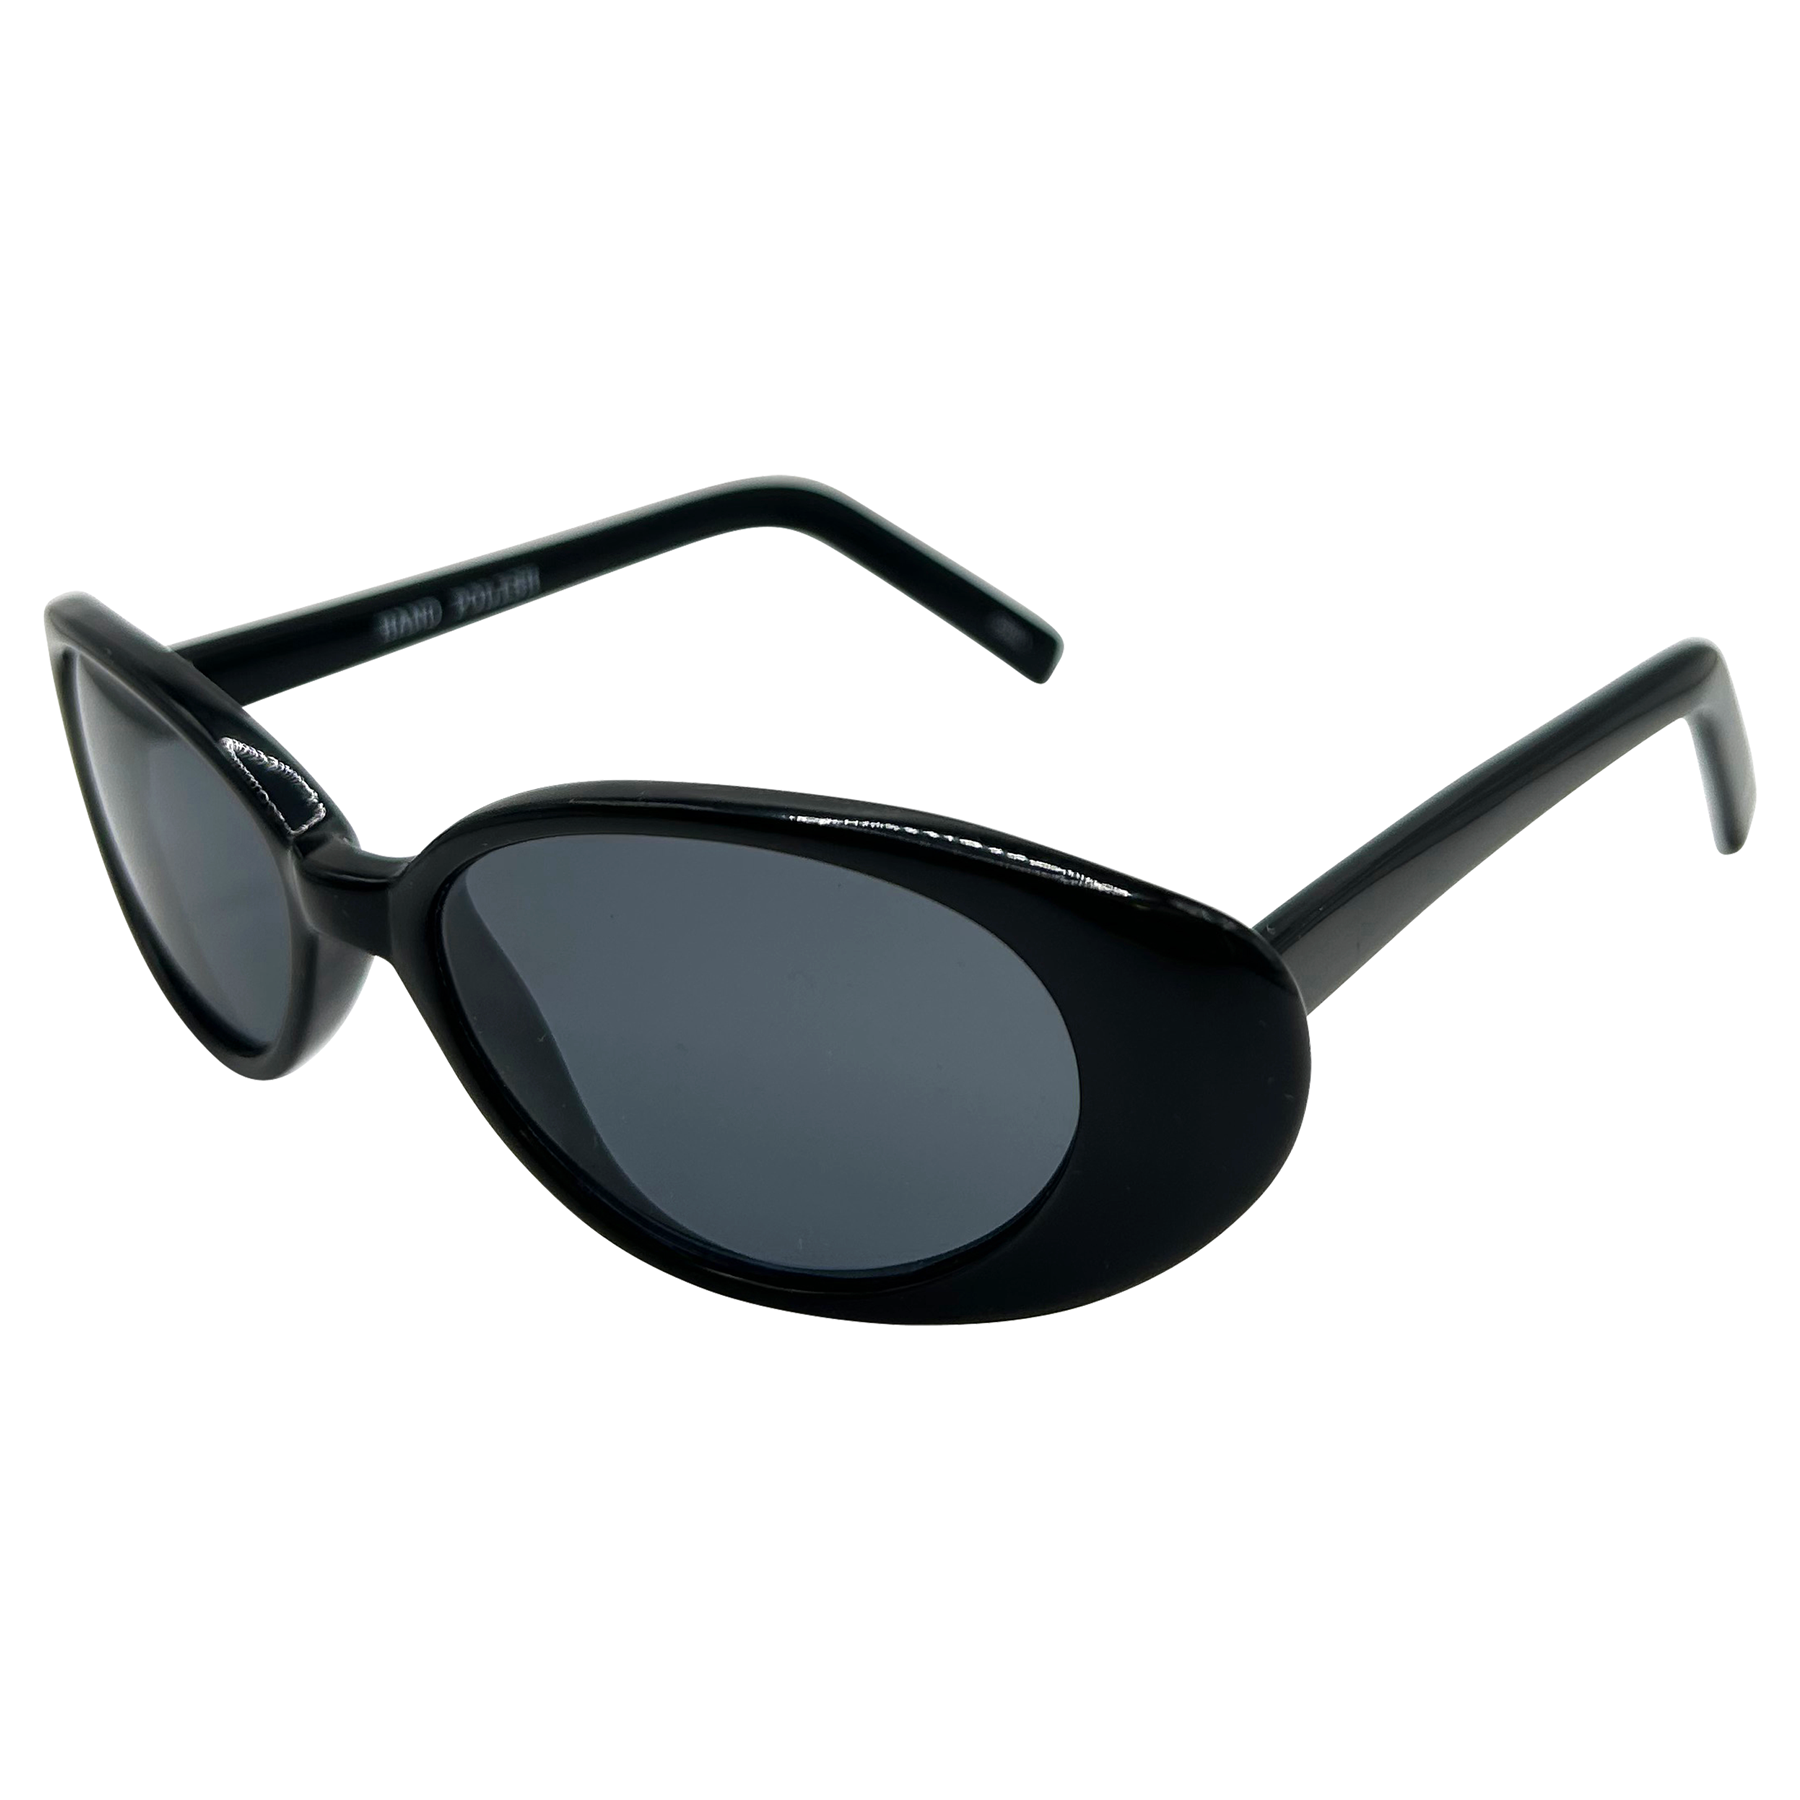 FLYIN' Oval Sunglasses